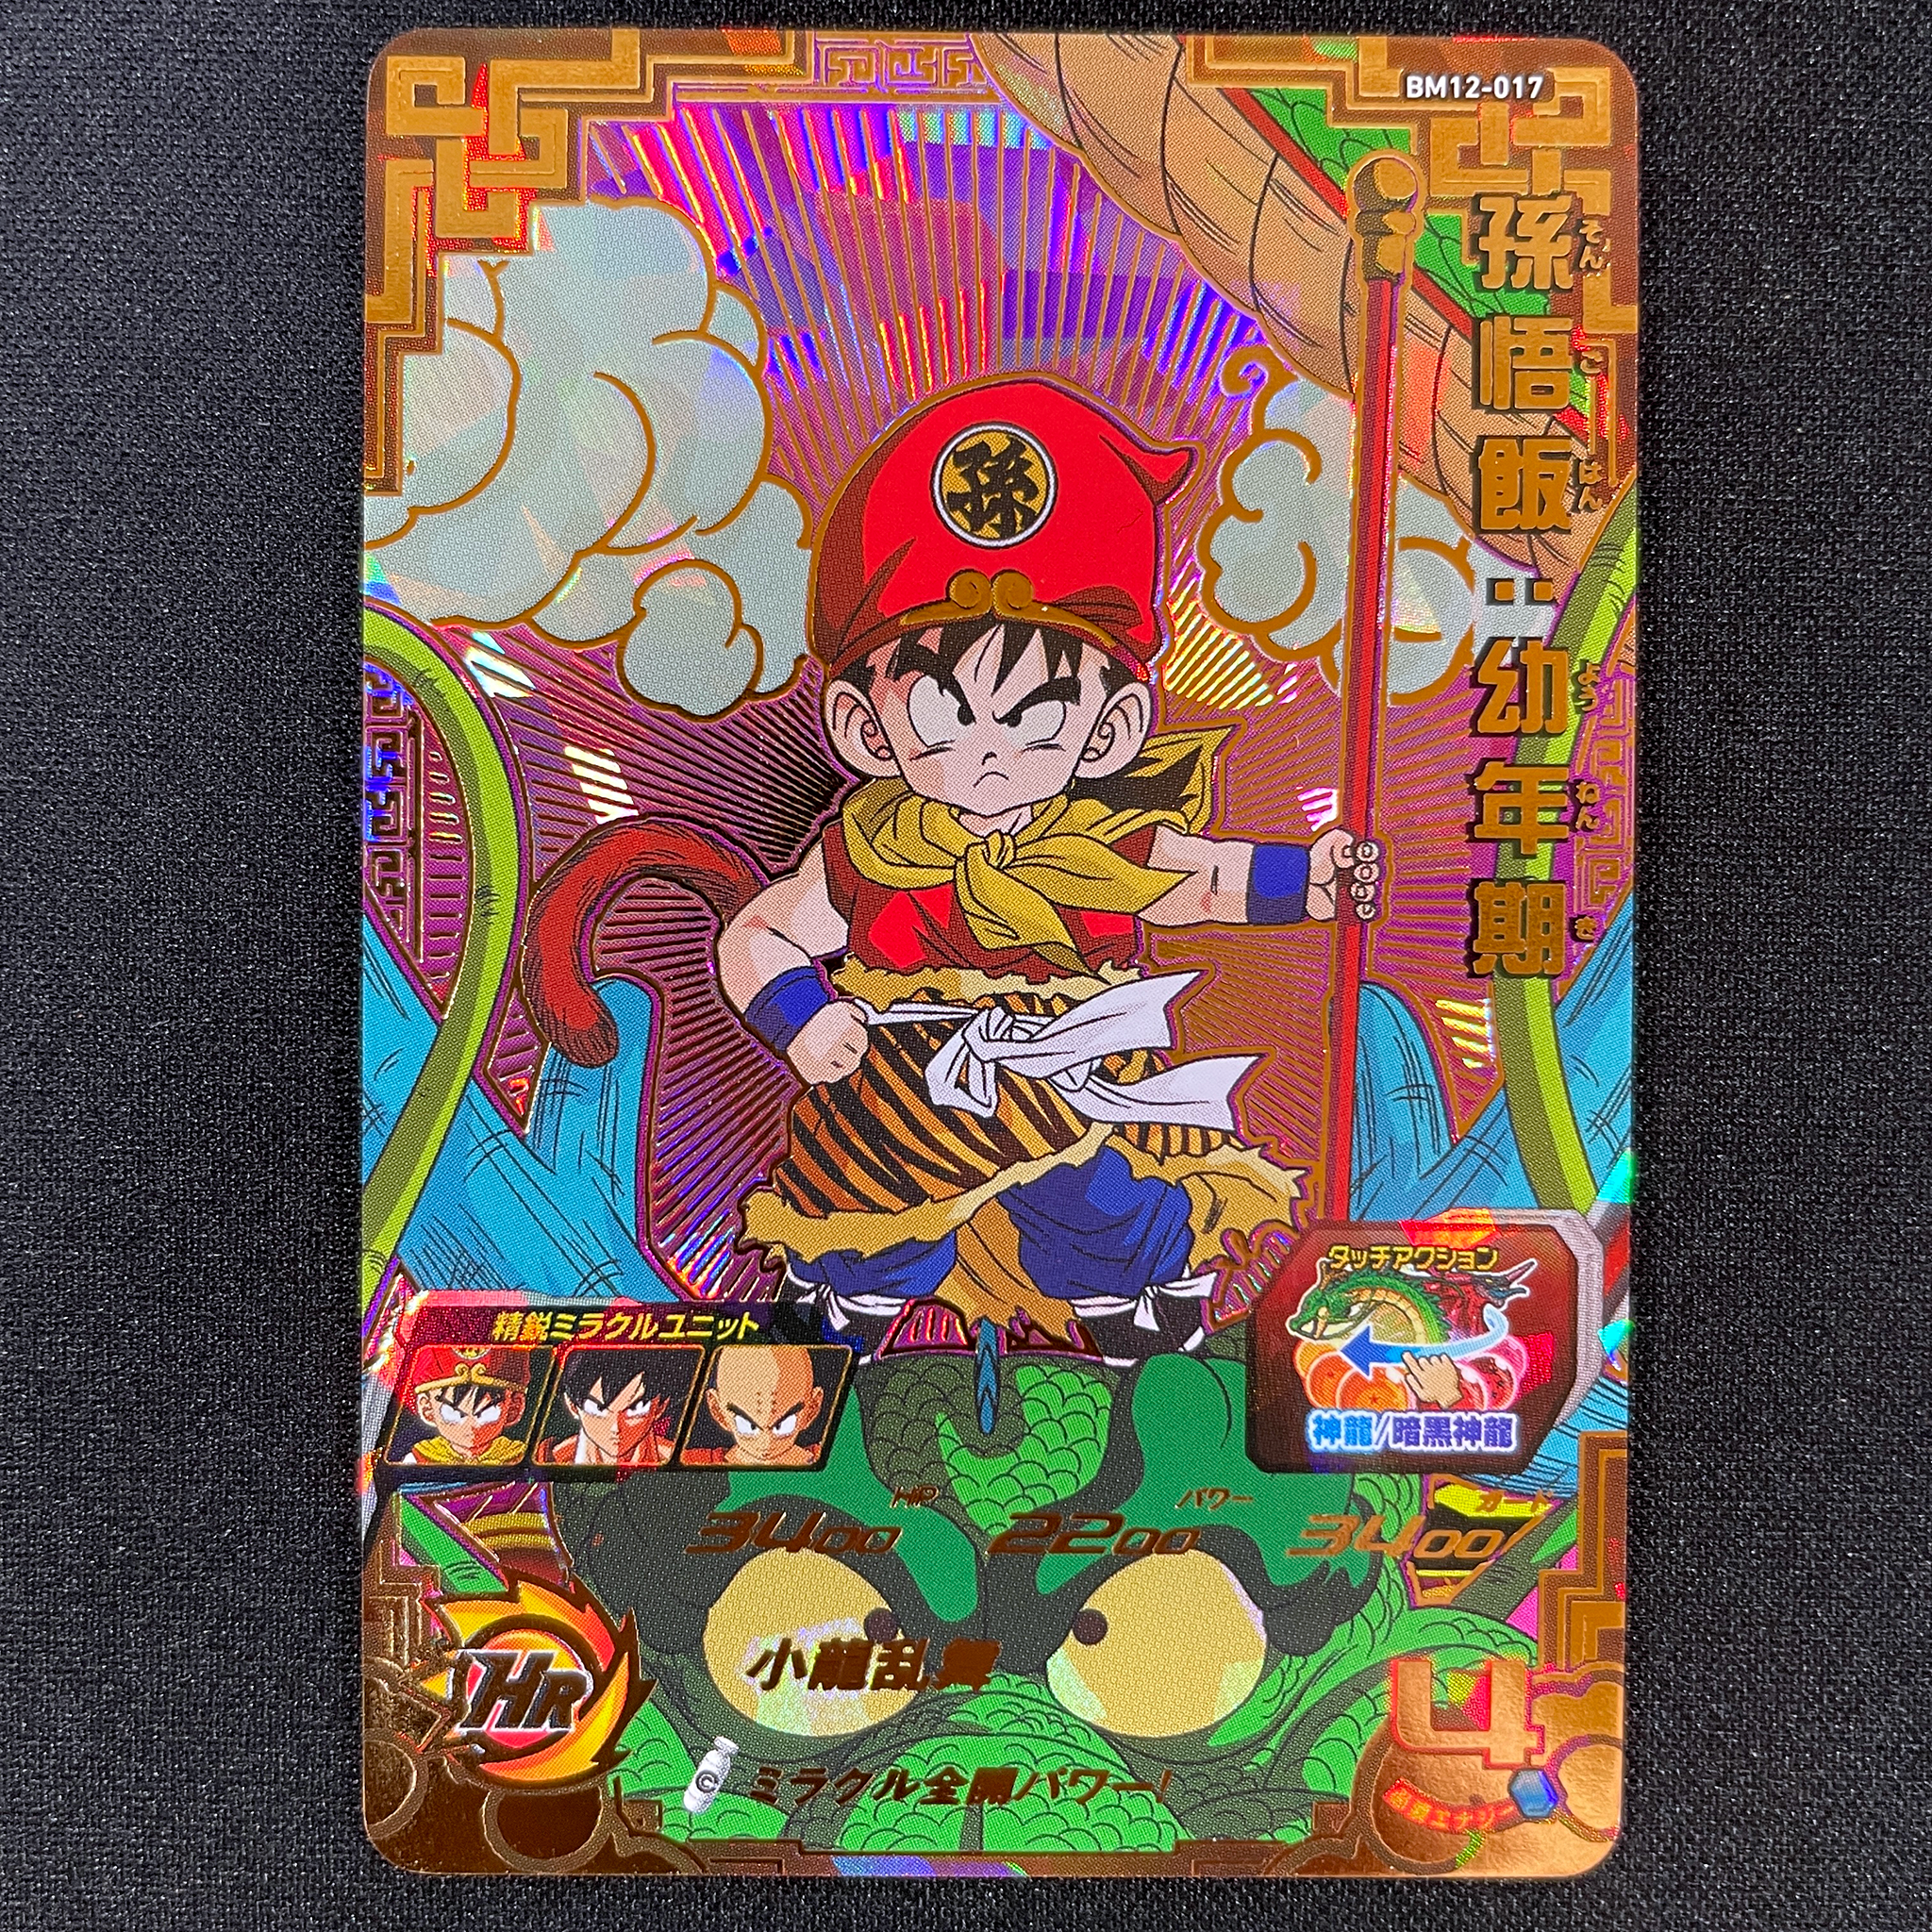 SUPER DRAGONBALL HEROES Card Game - Dragon Ball - Collectible Card